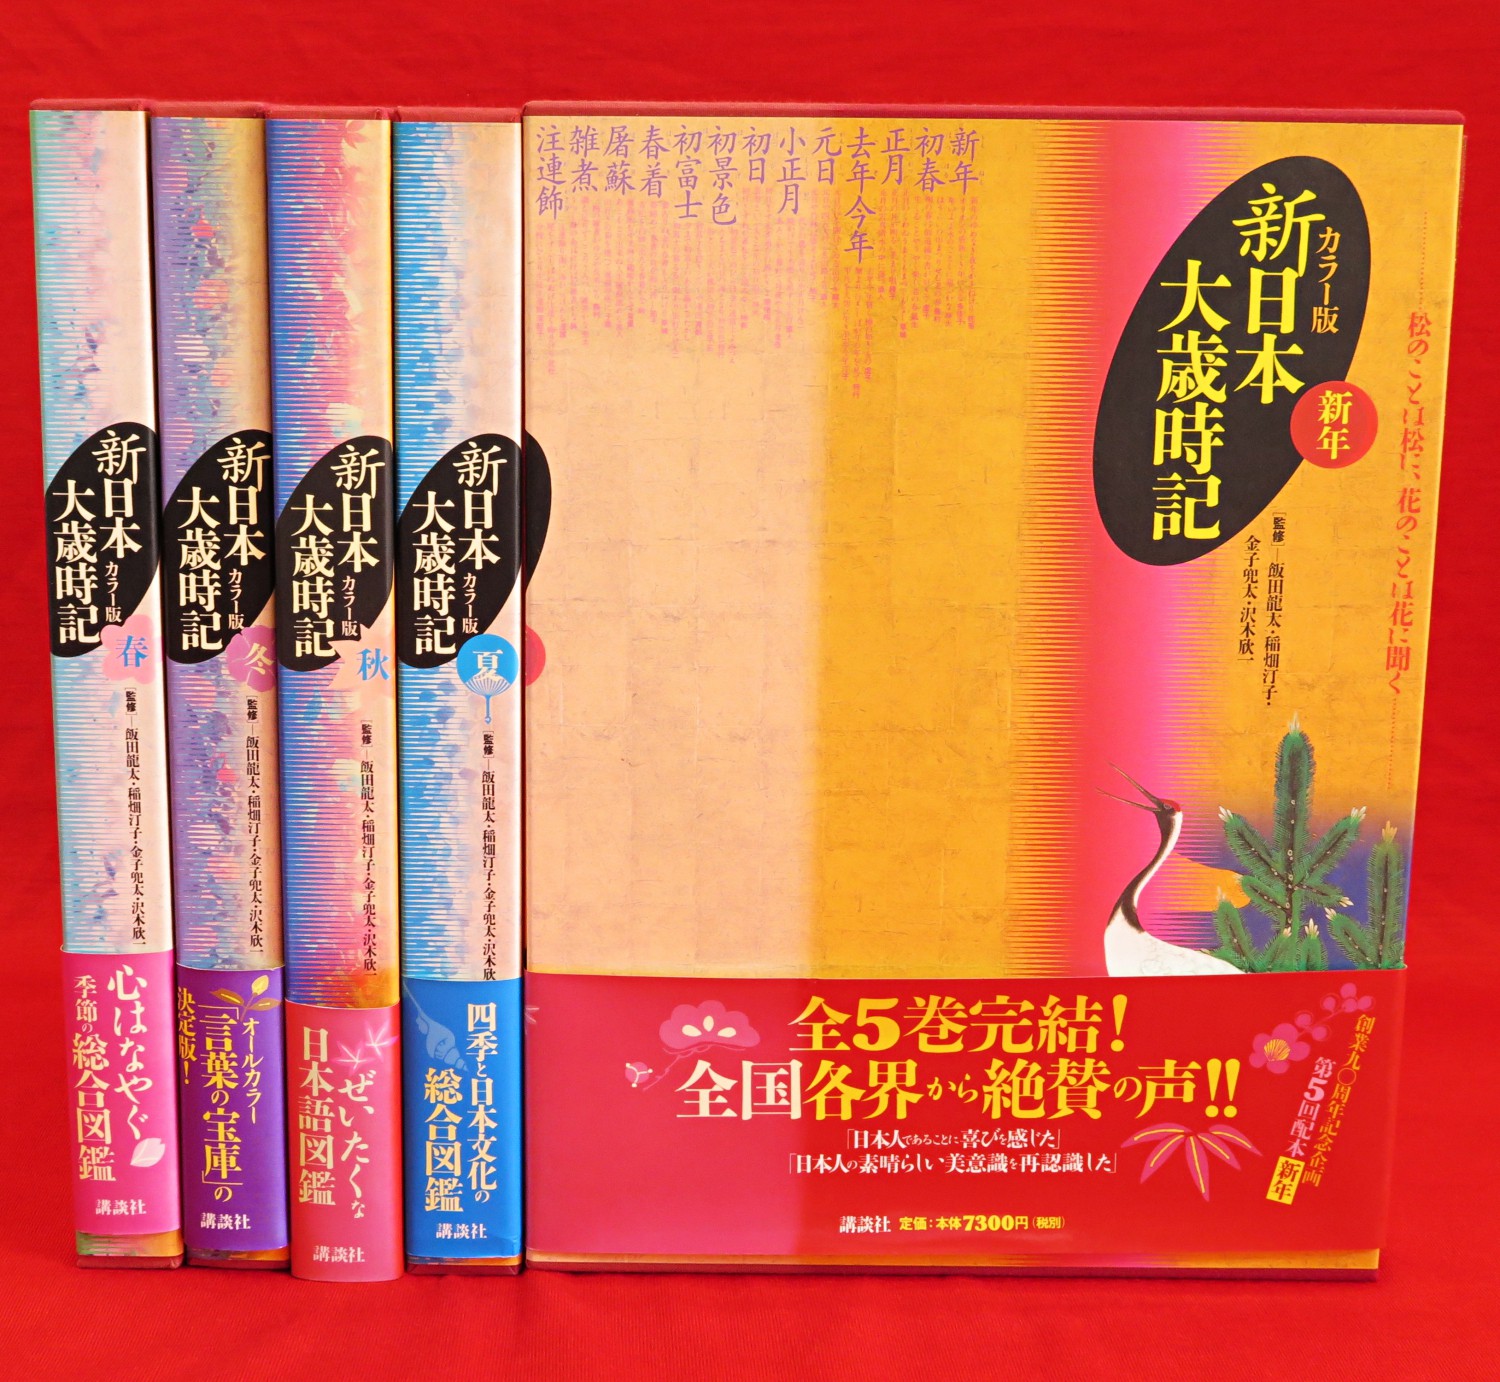 日本国語大辞典 第二版 本巻全13巻』など、美術大判、禅関連ほか計48点